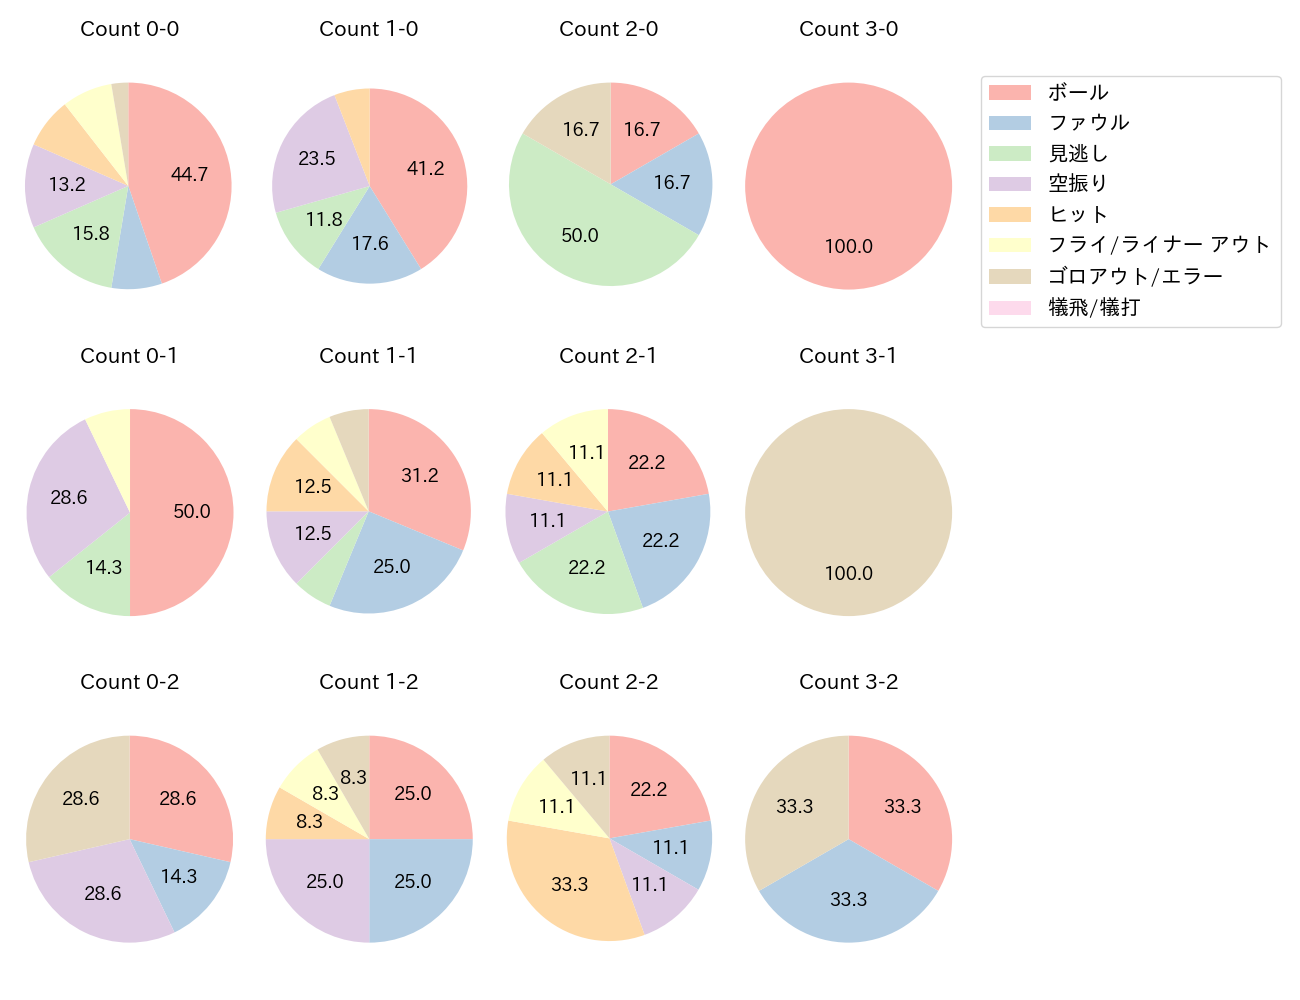 山川 穂高の球数分布(2022年4月)